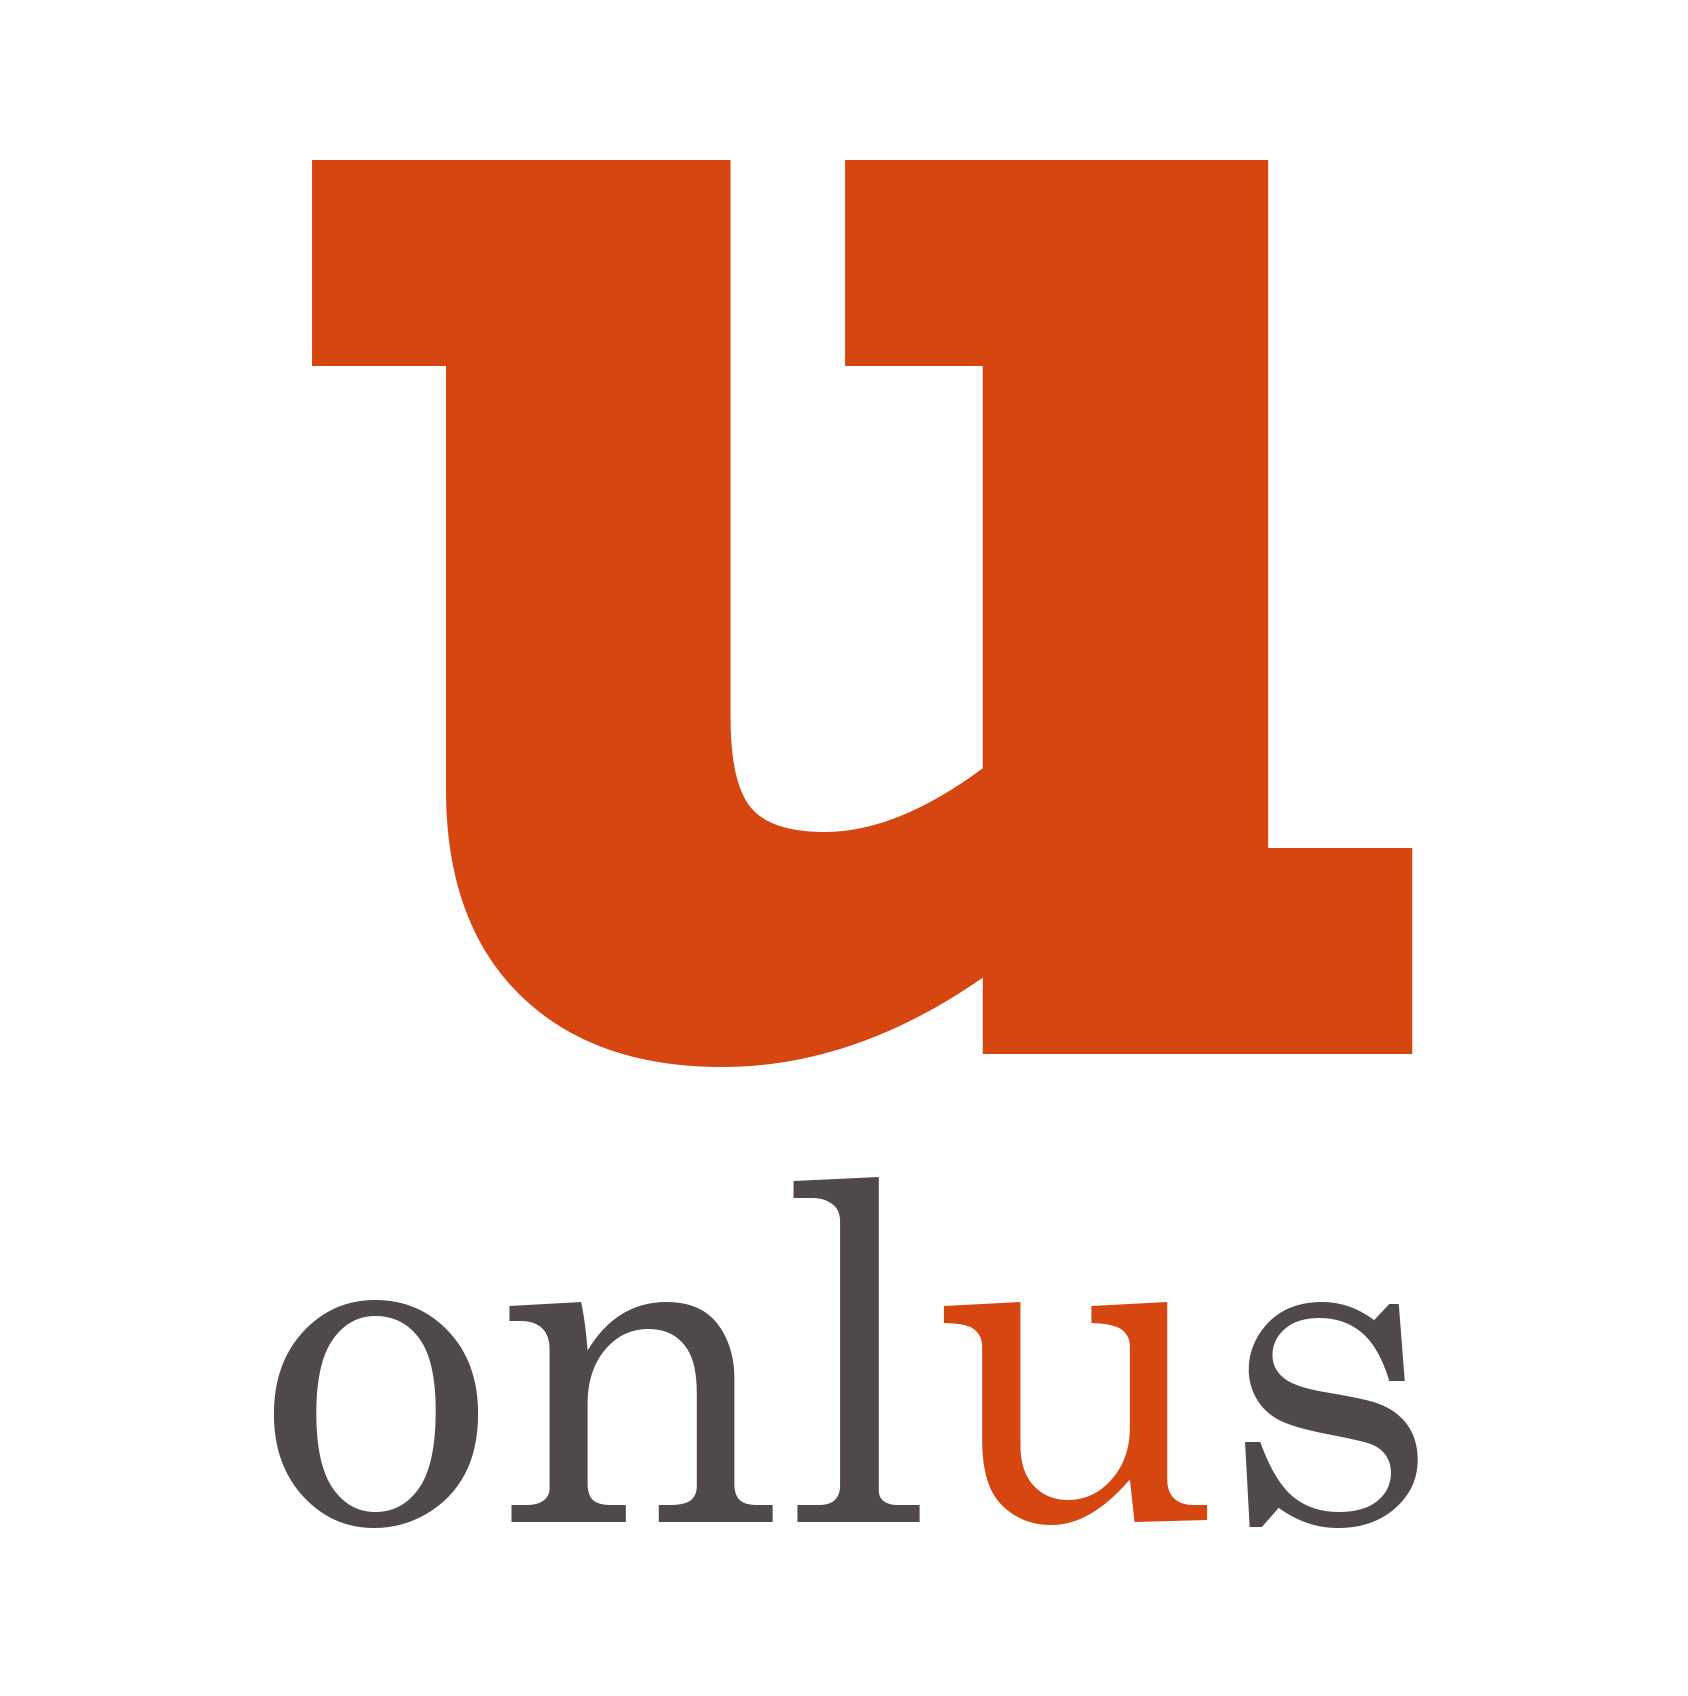 Uonlus logo